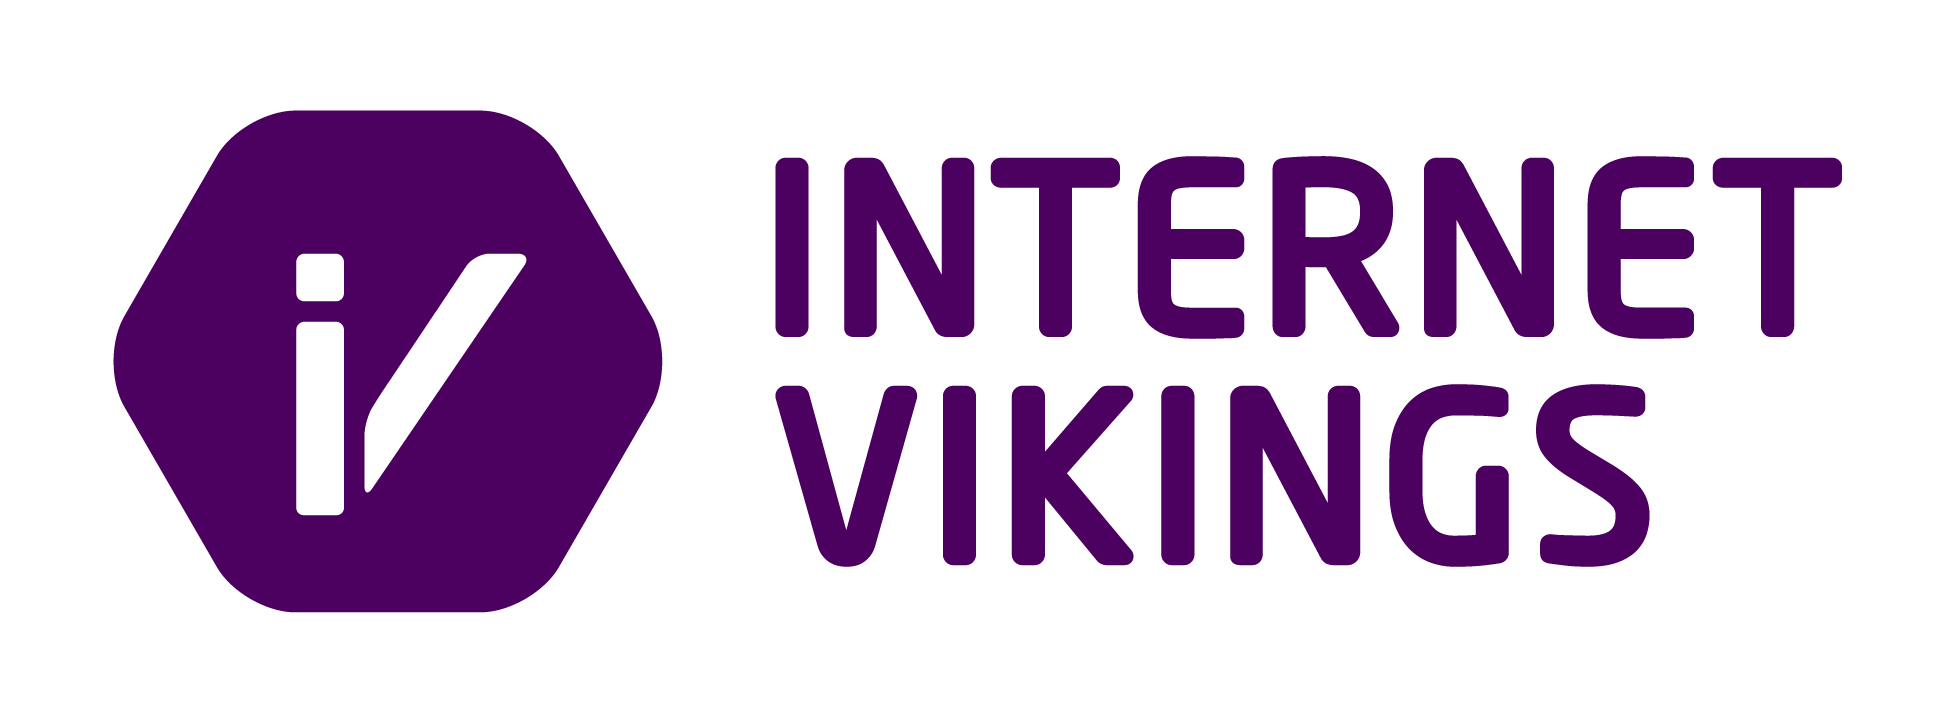 Internet Vikings